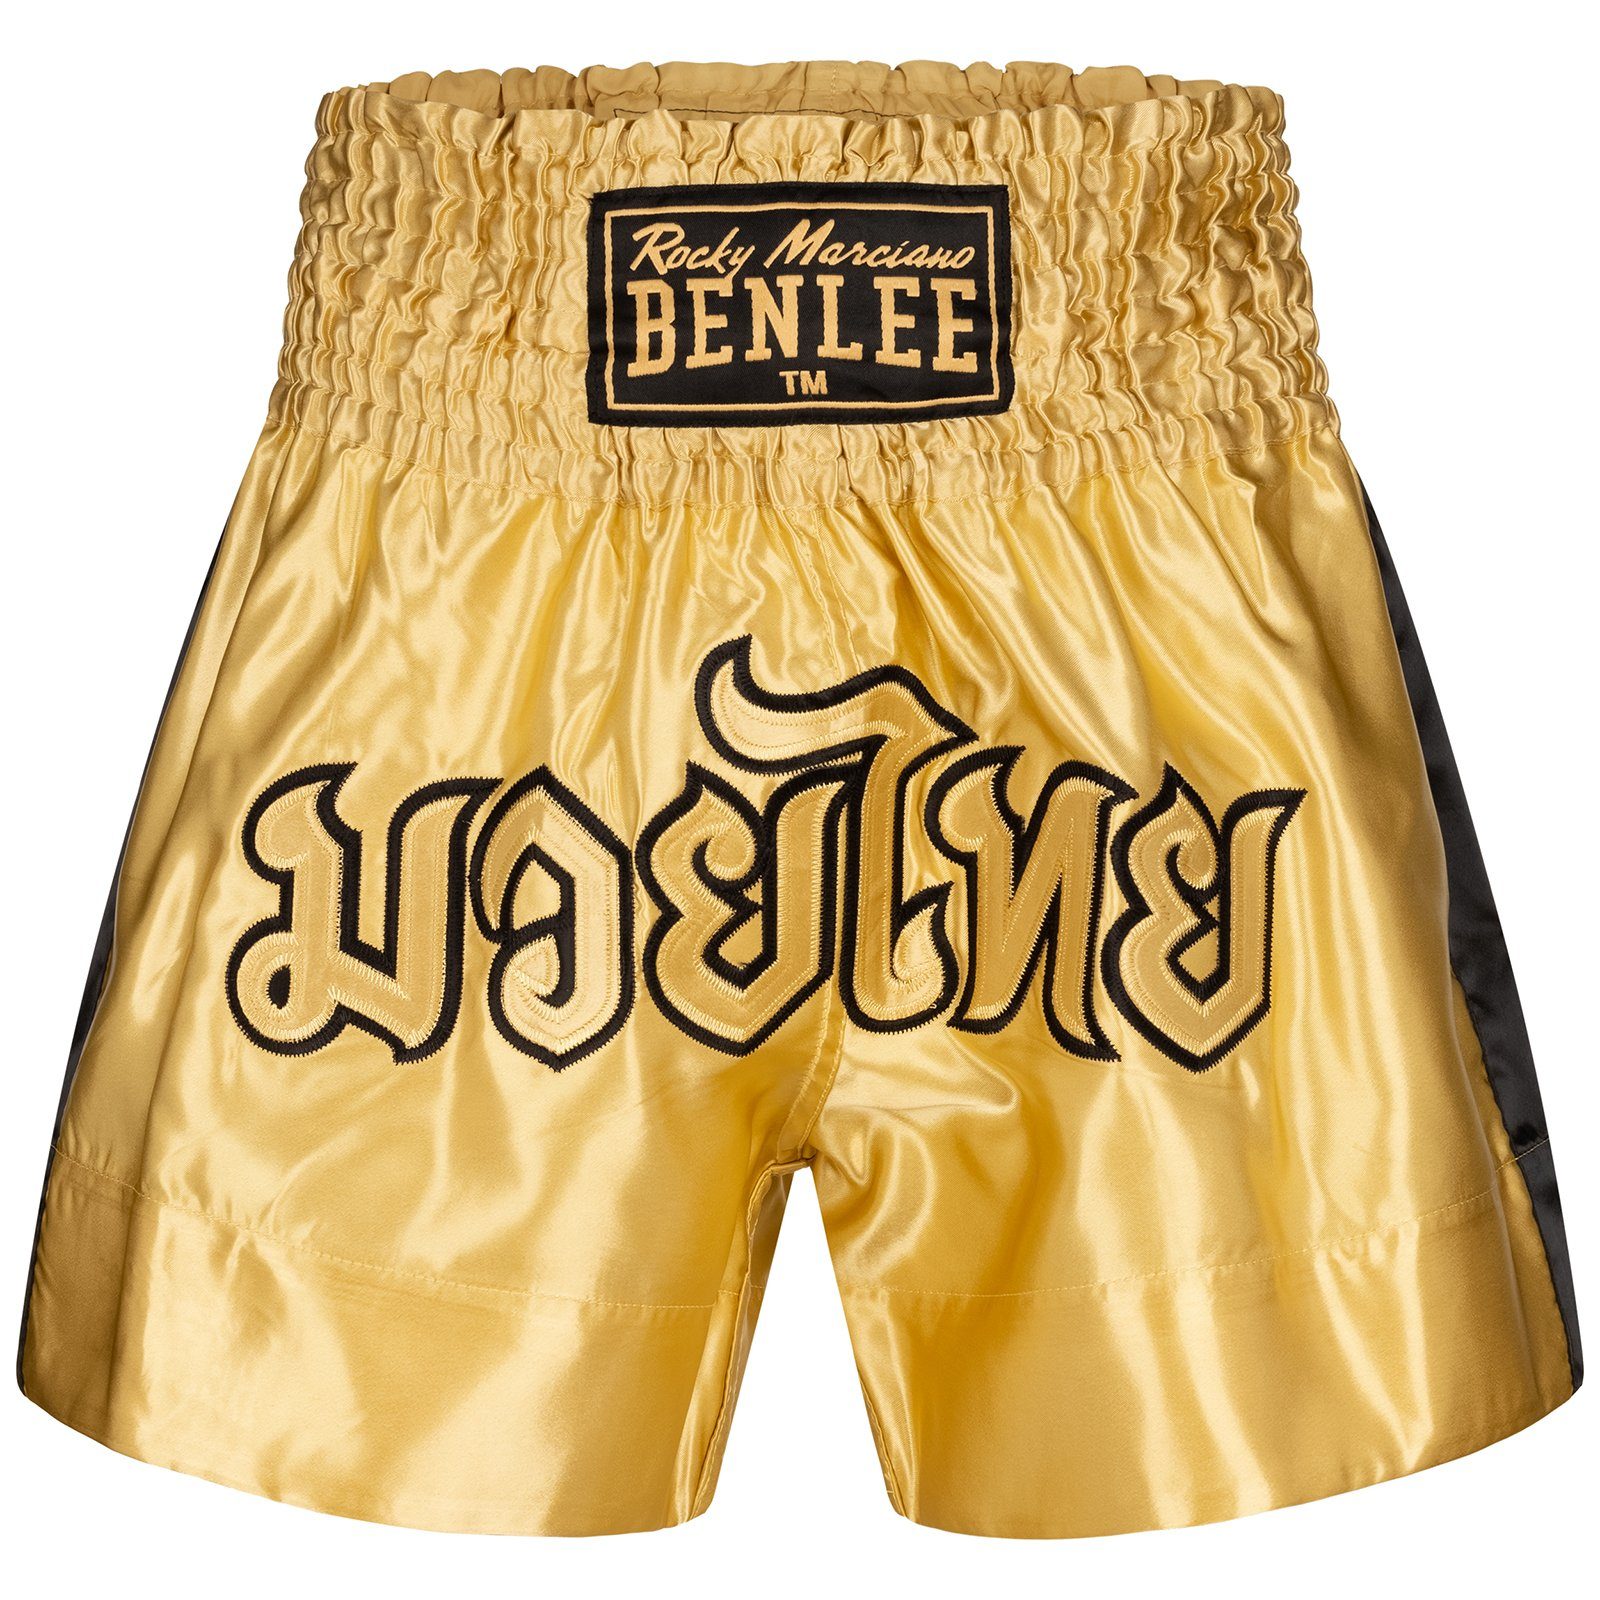 Benlee Rocky Marciano Trainingshose GOLDY Gold/Black